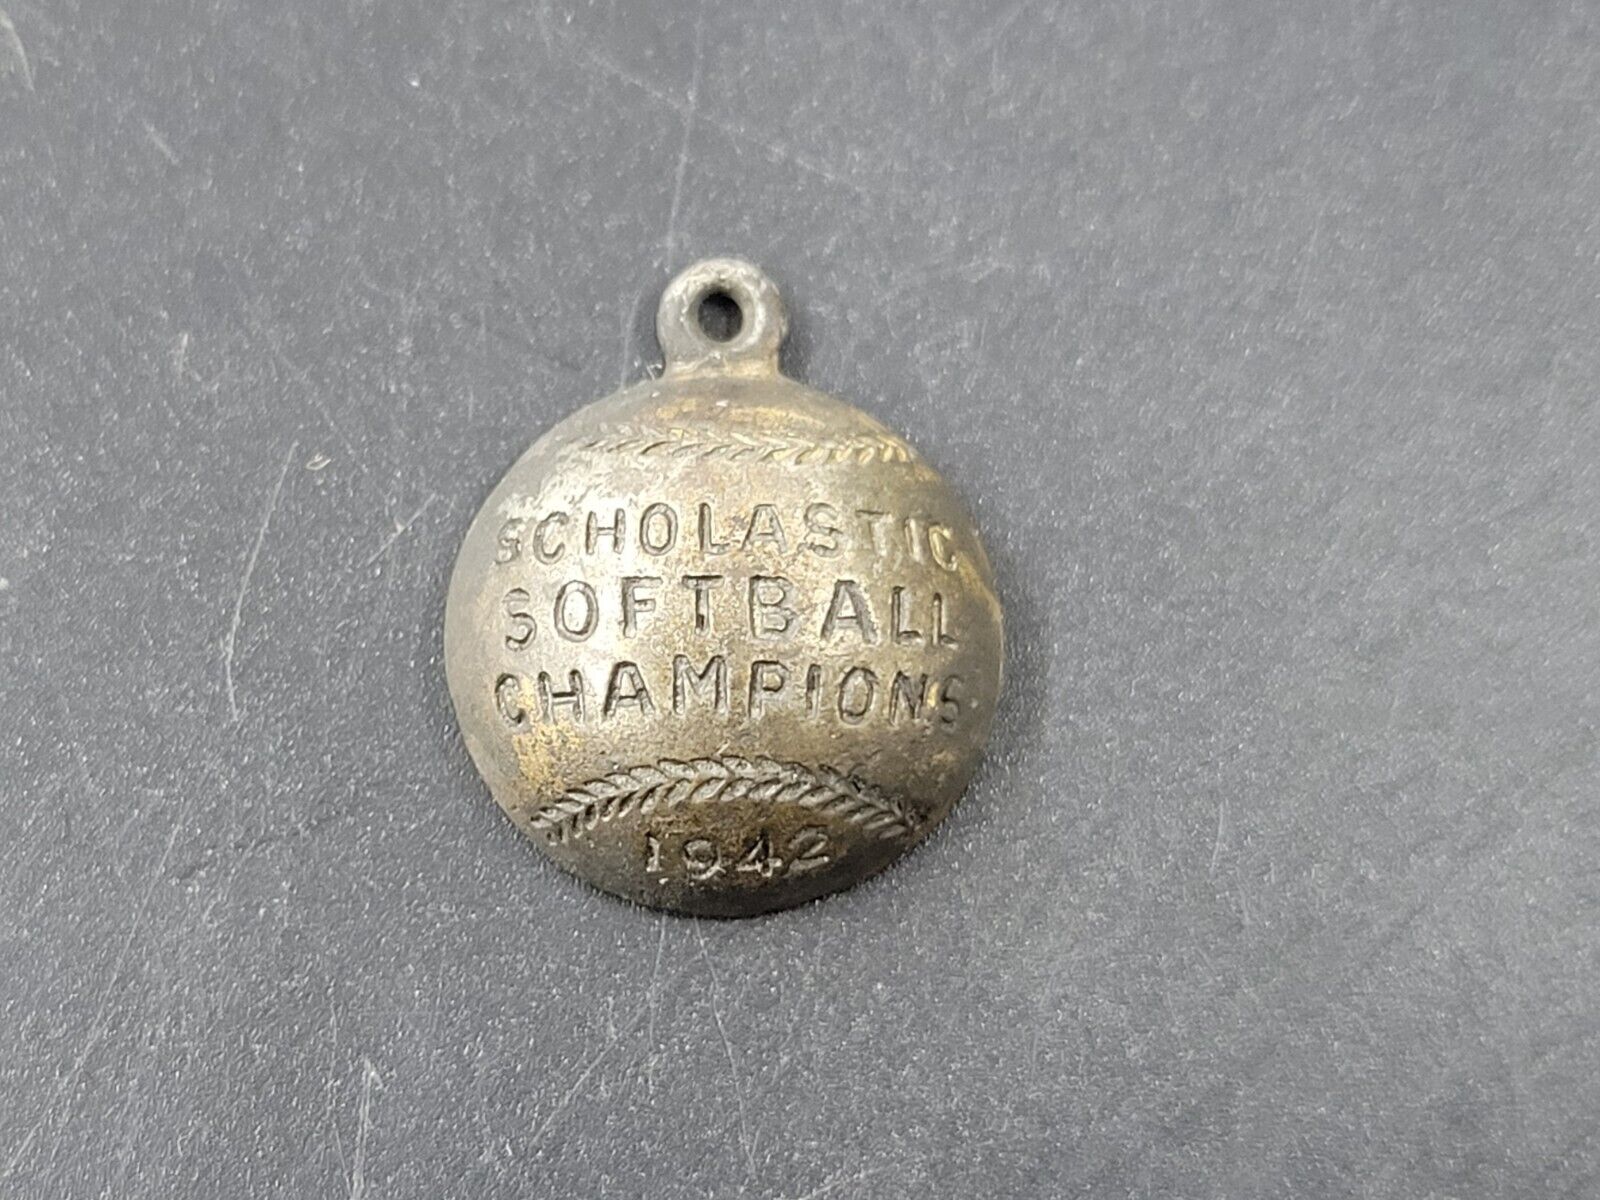 Vintage 1942 Scholastic Softball Championship Pendant. Pepsi-Cola Tournament